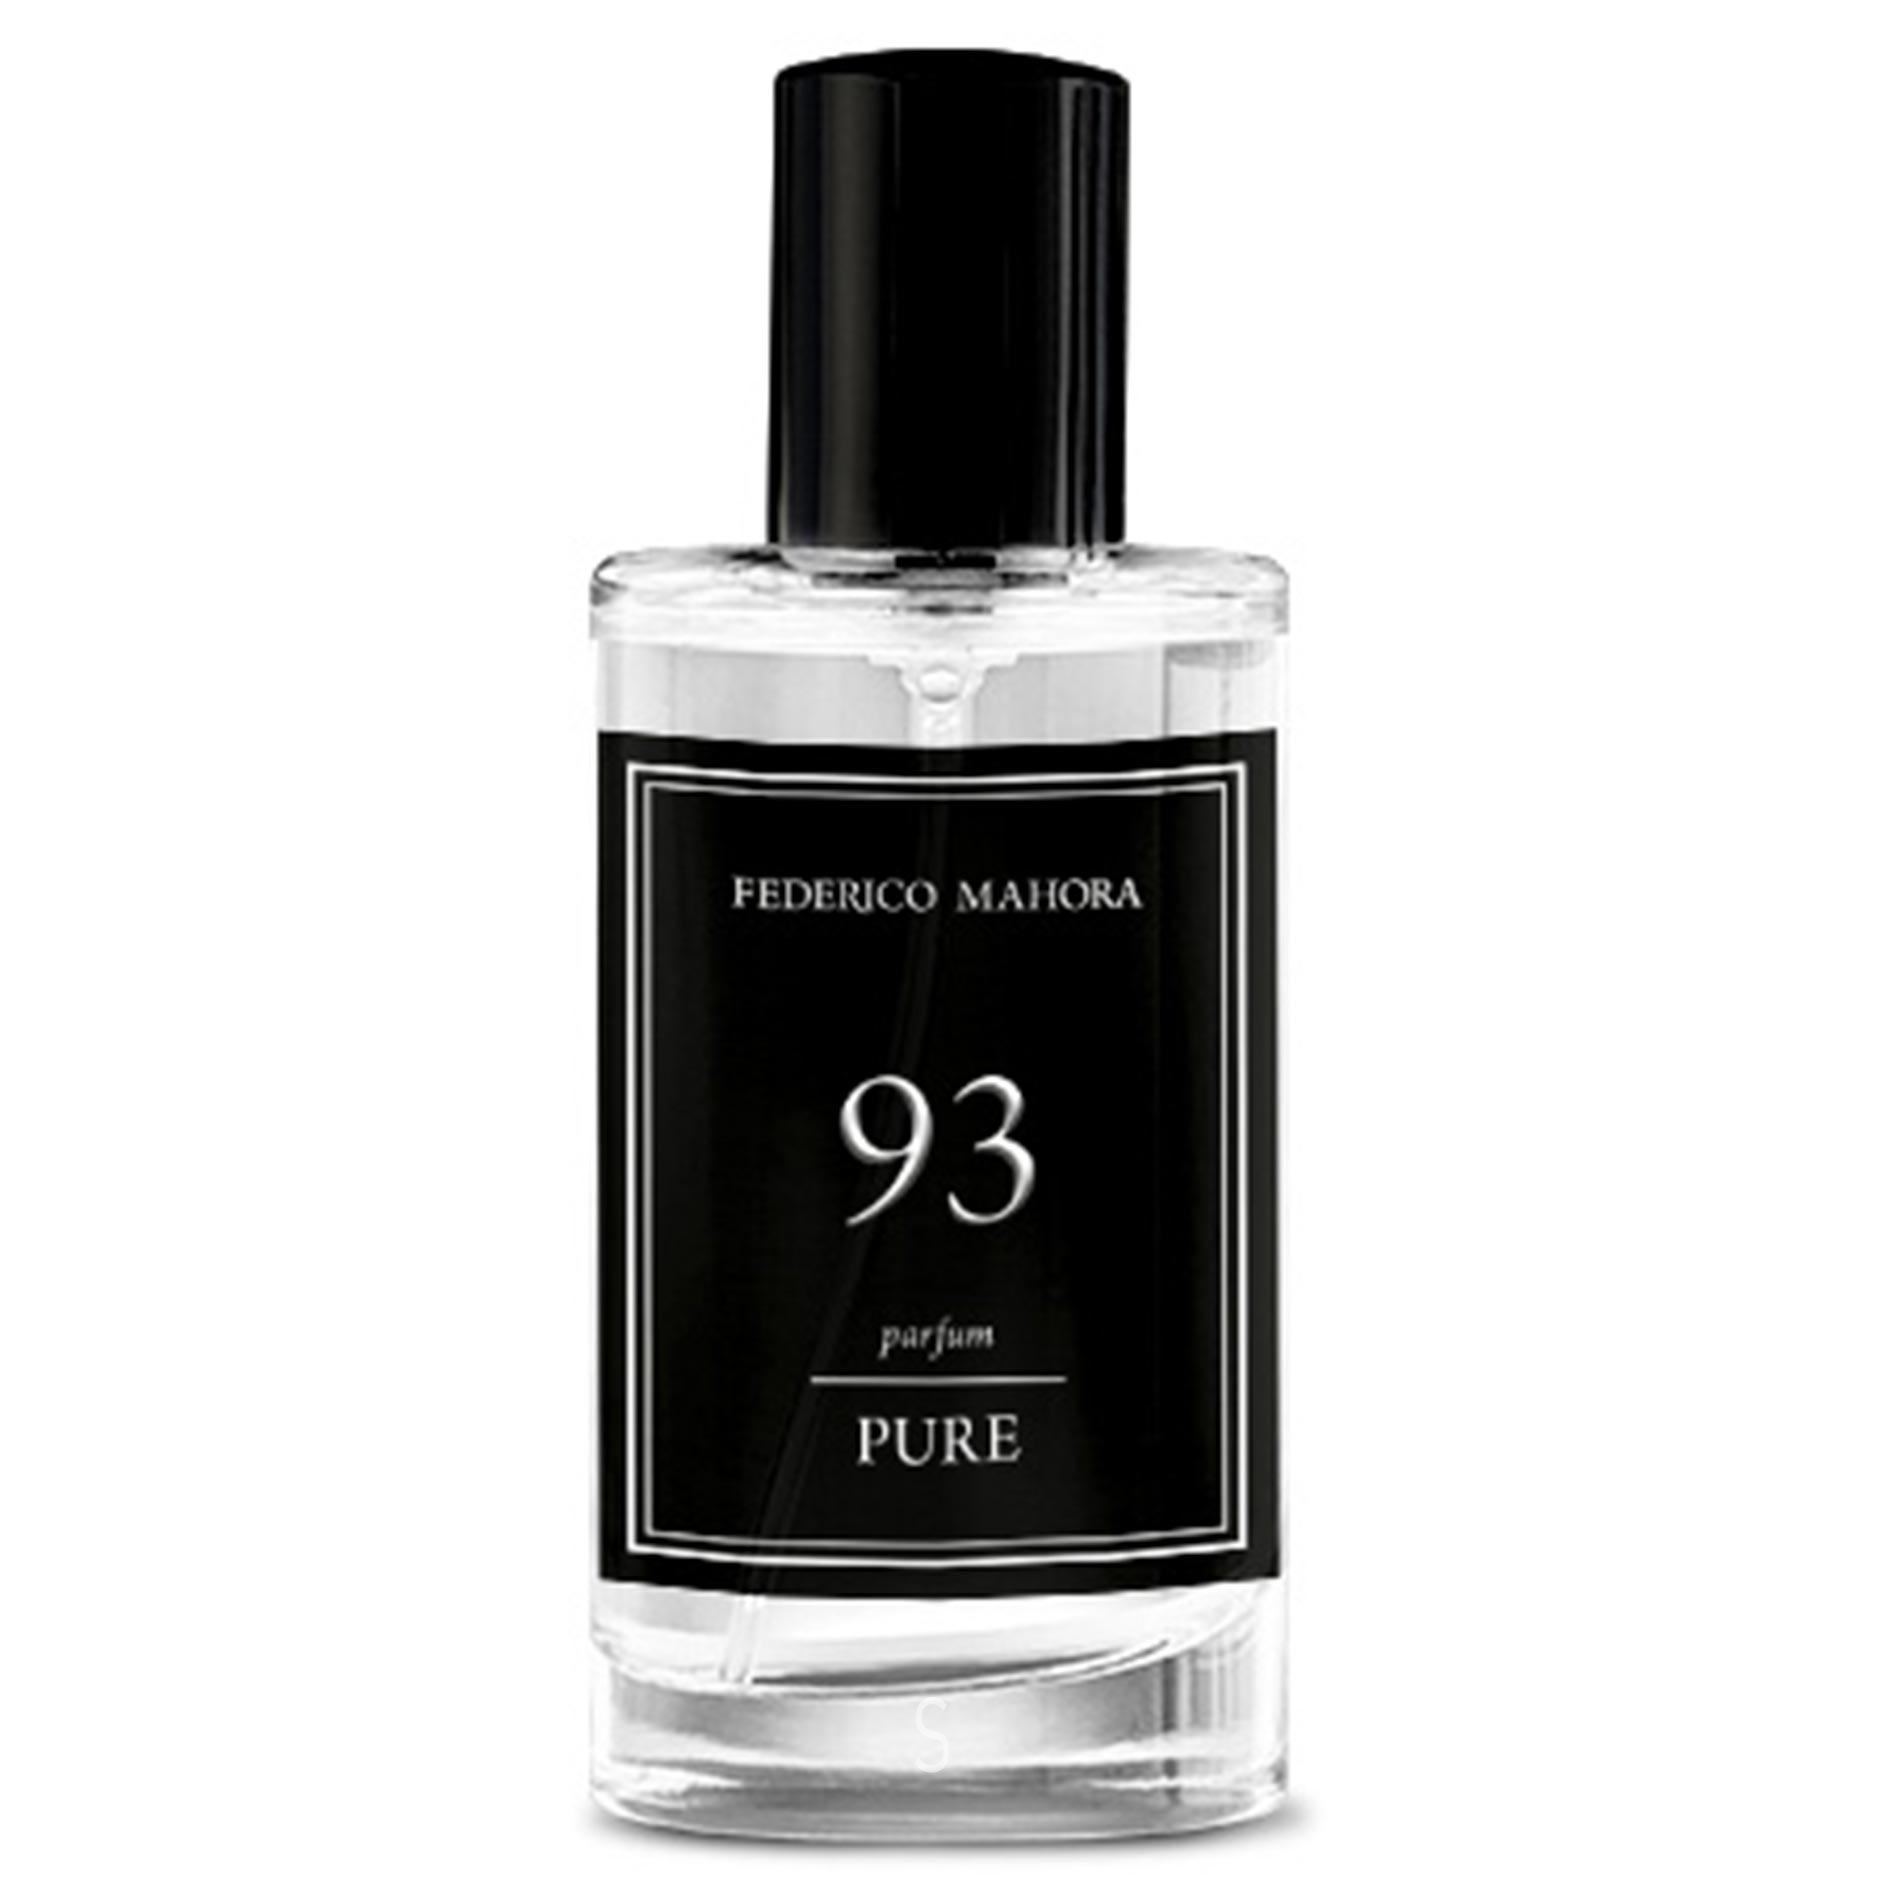 PURE 93 Parfum by Federico Mahora